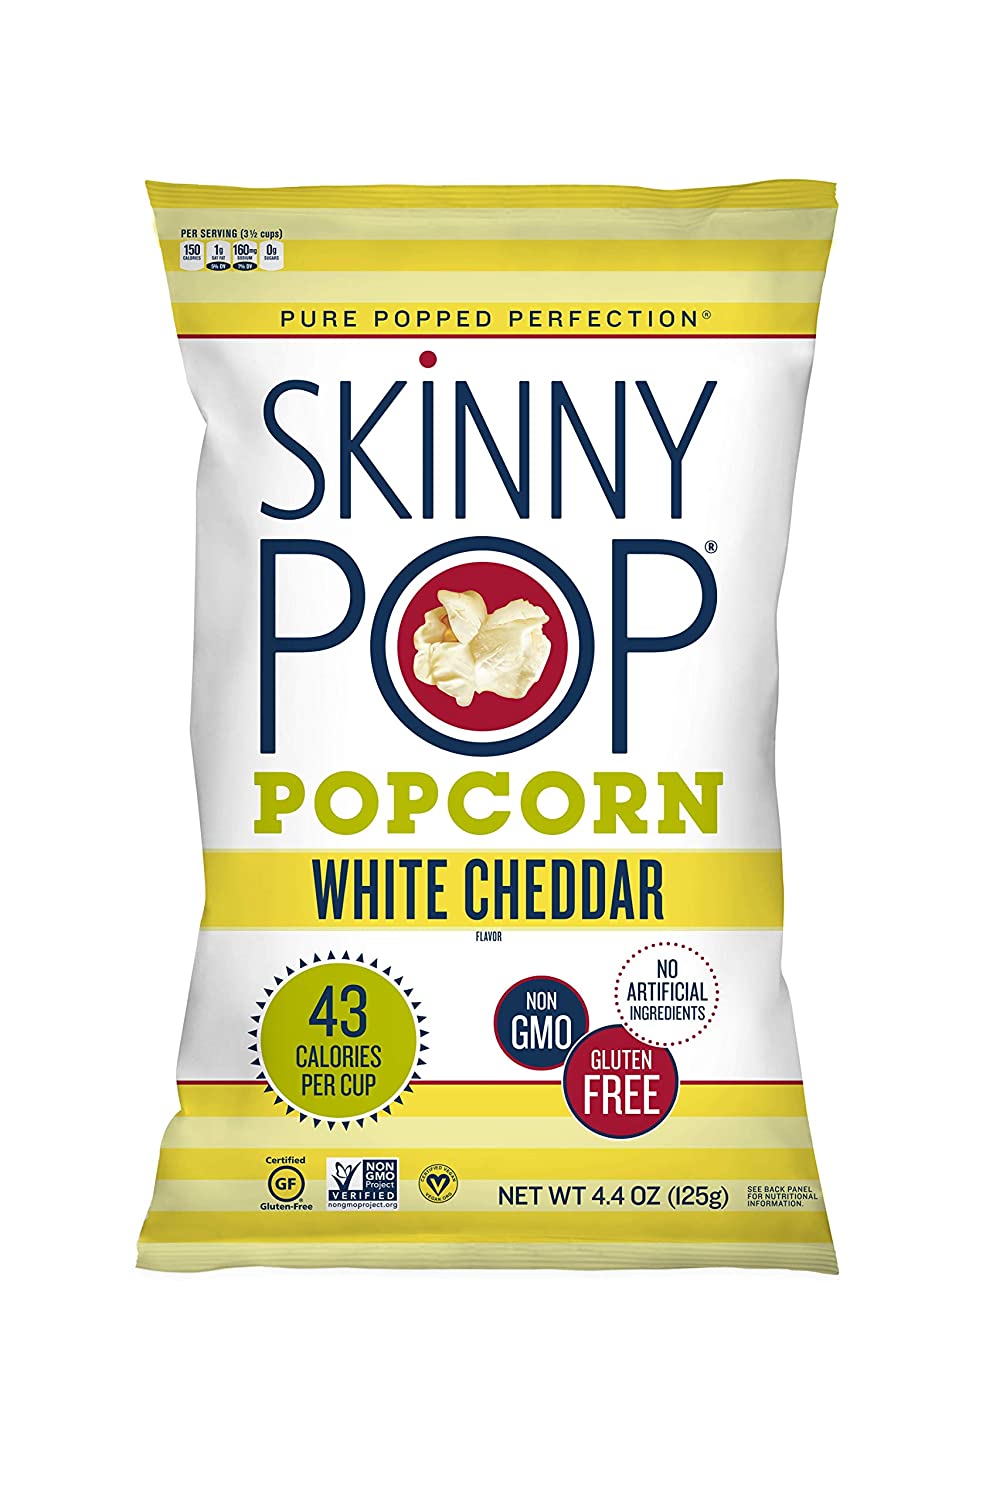 4.4-Oz SkinnyPop Popcorn (White Cheddar, Sea Selt & Pepper, Original) from $2.51 + Free Shipping w/ Prime or $25+